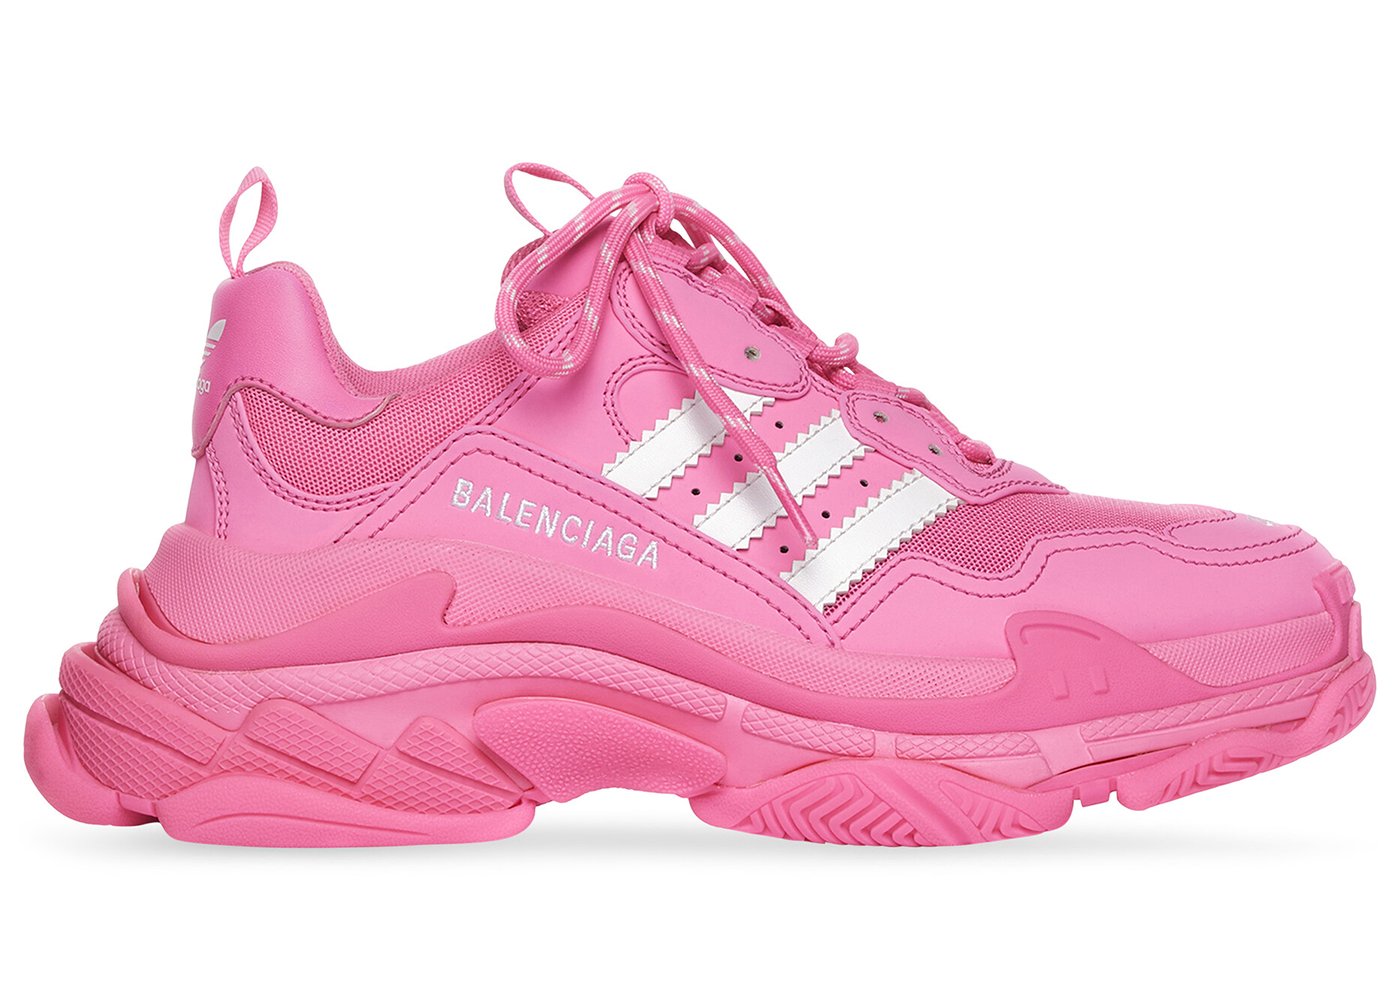 Balenciaga x adidas Triple S Neon Pink (W) sneakers